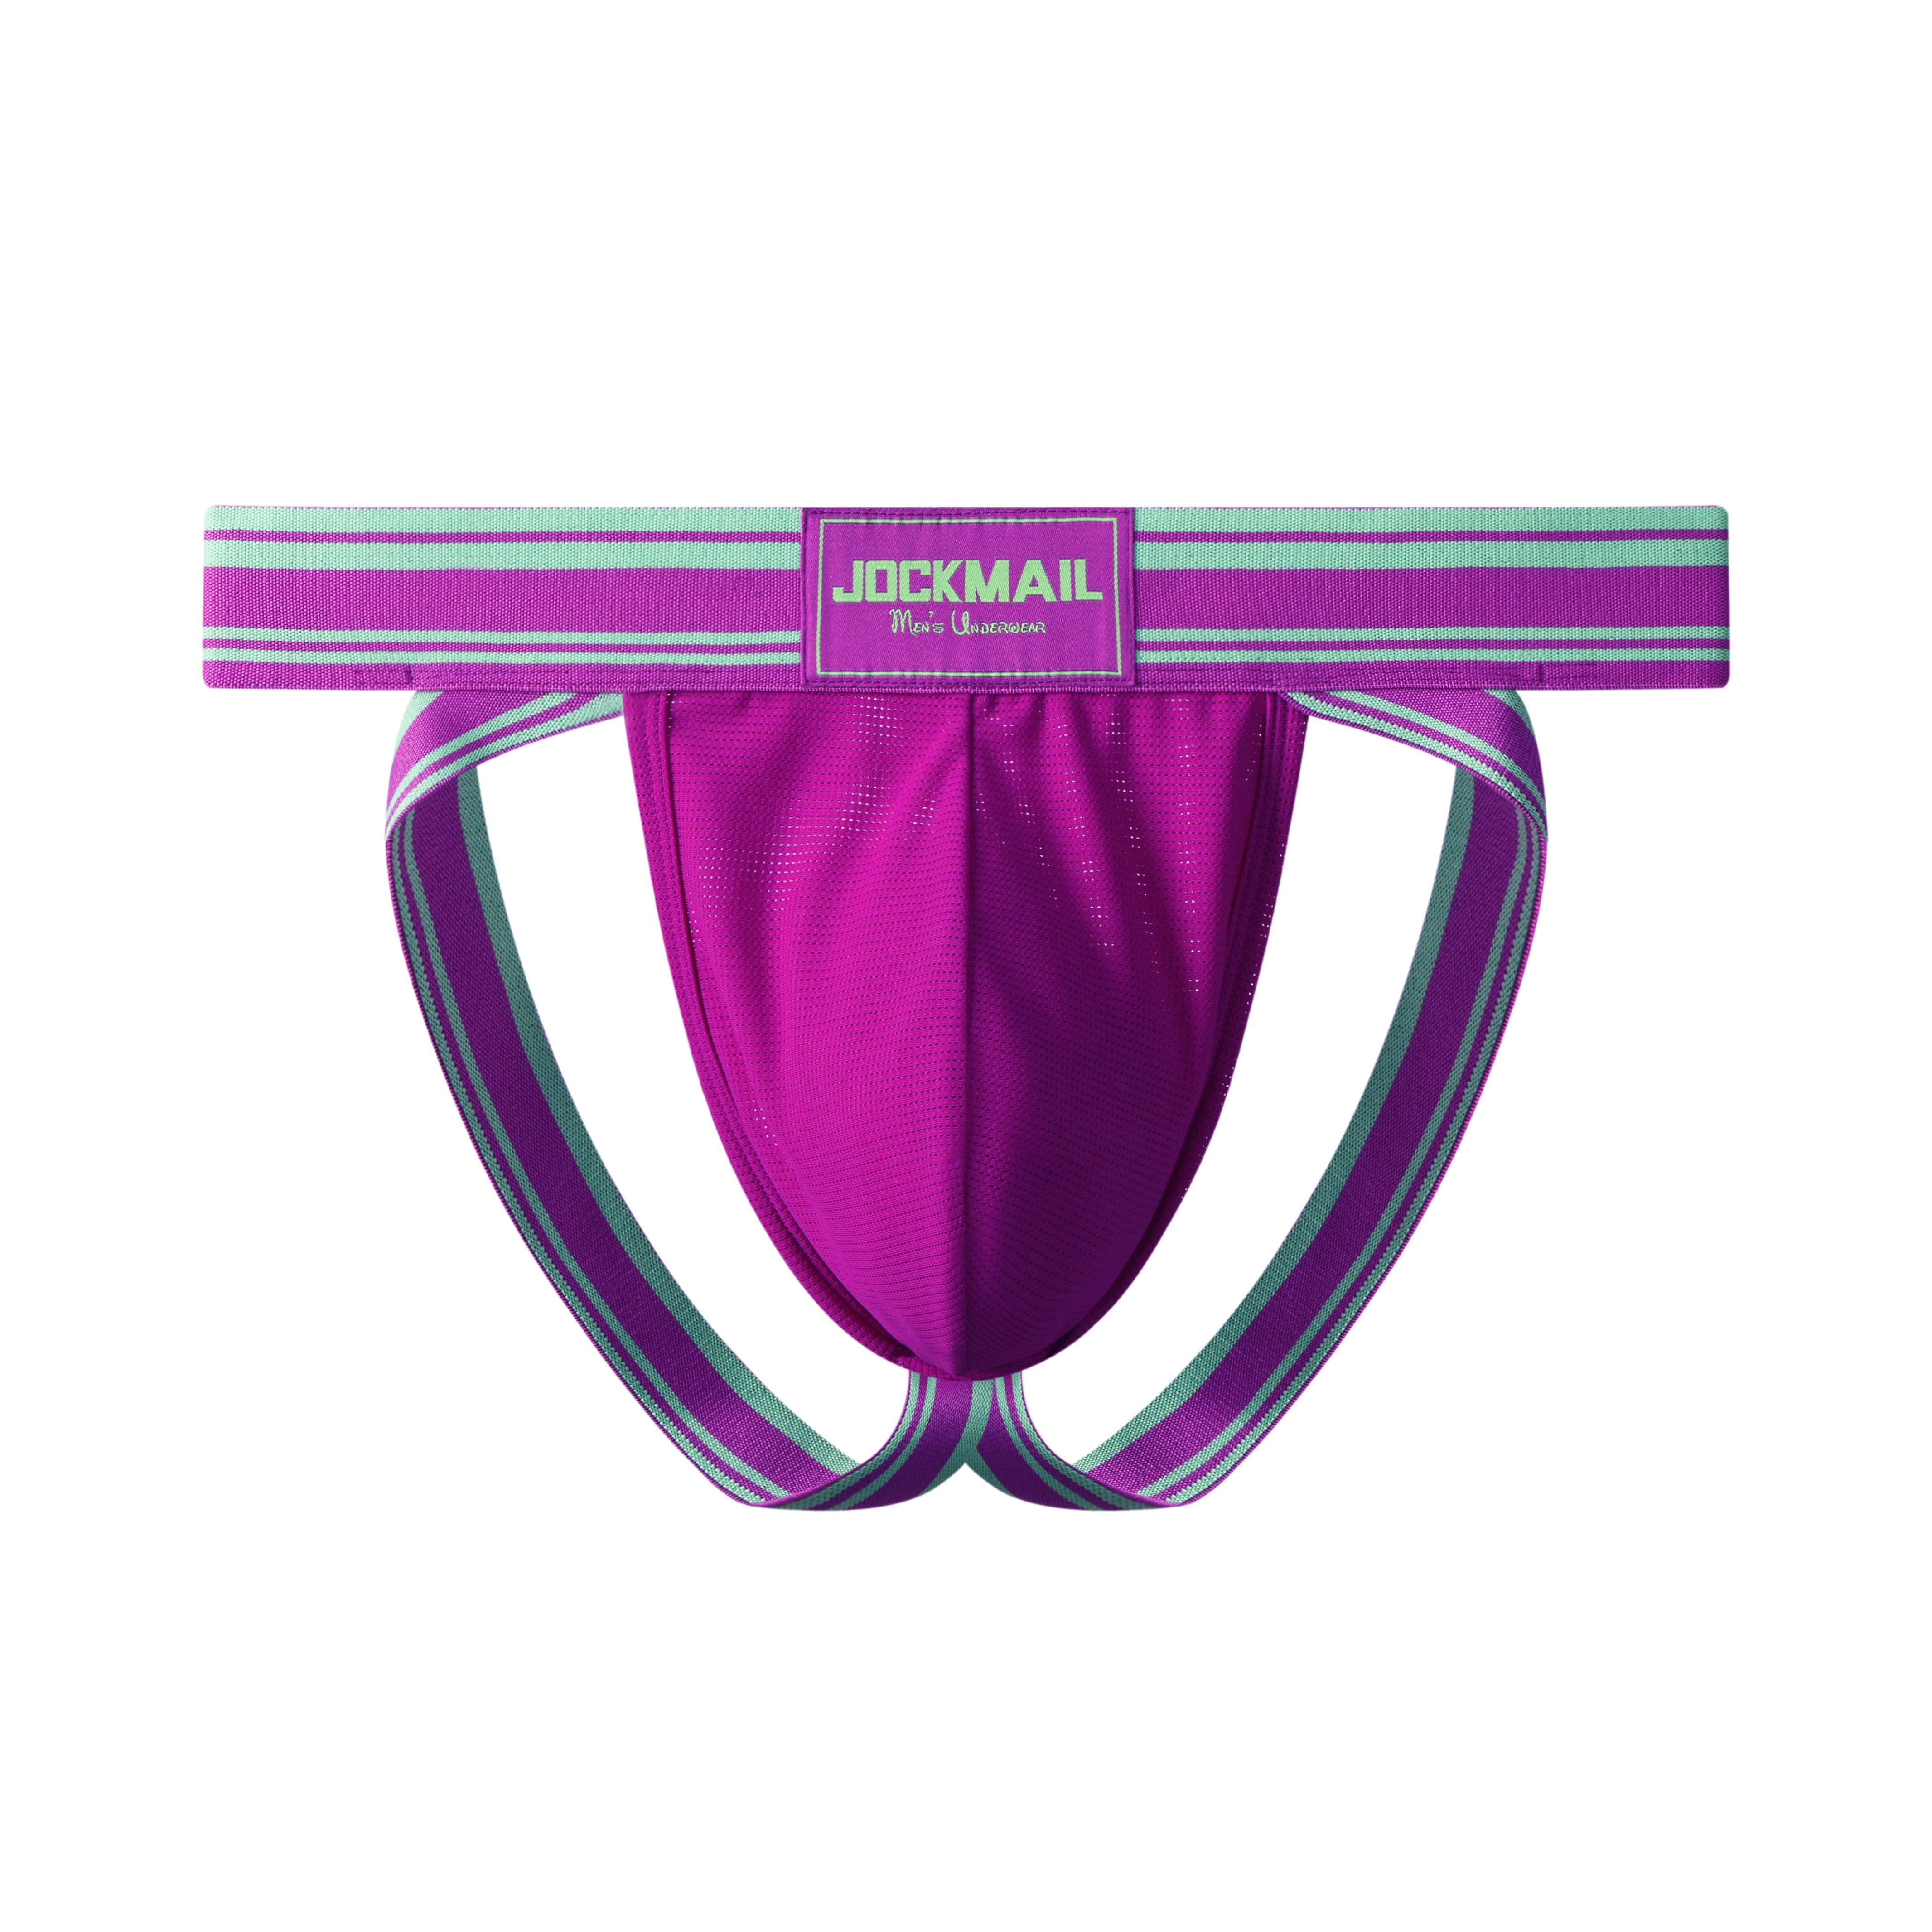 JOCKMAIL Brand Sexy Men Underwear hot Fun Playful Printed Men briefs Men  Panties shorts (M, 1) at  Men's Clothing store